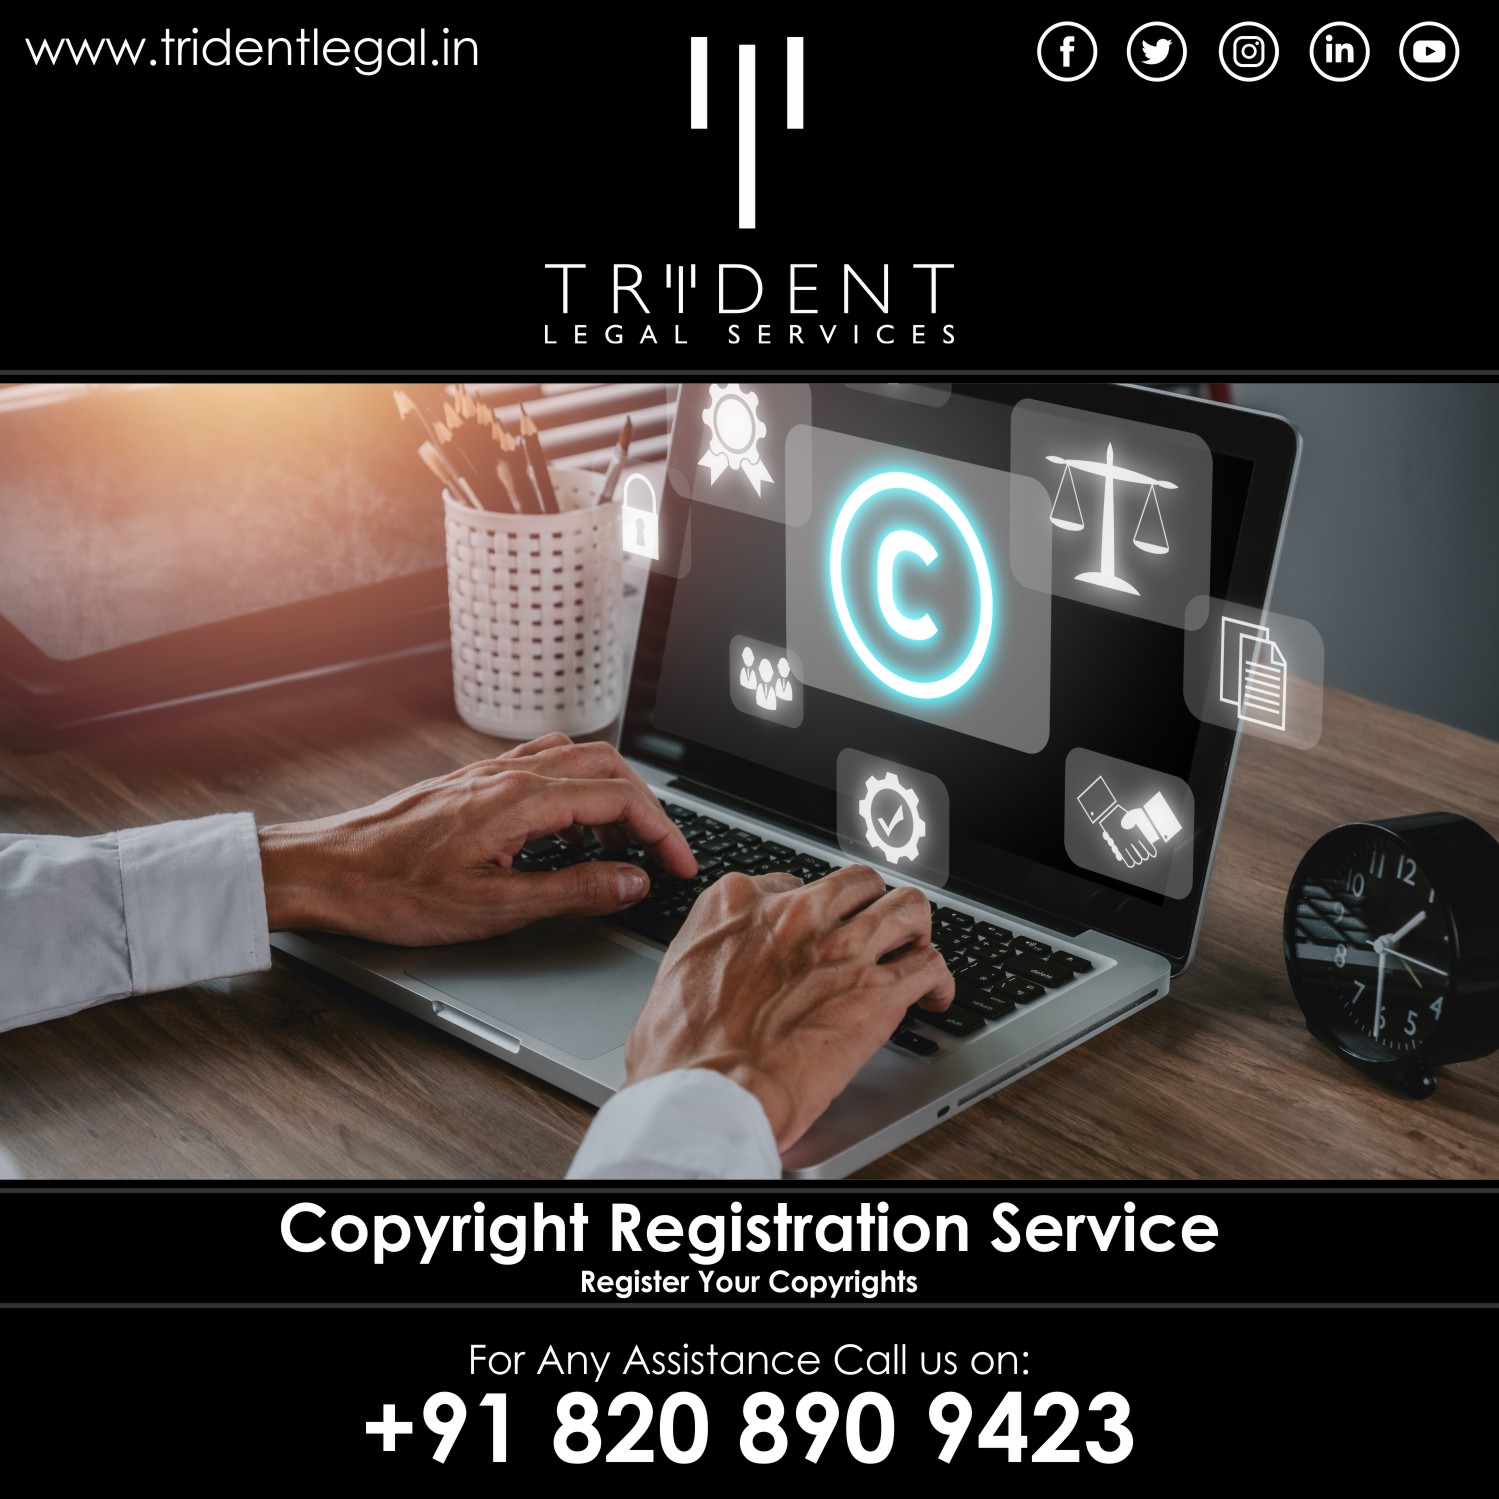 Copyright Registration Service in Pune